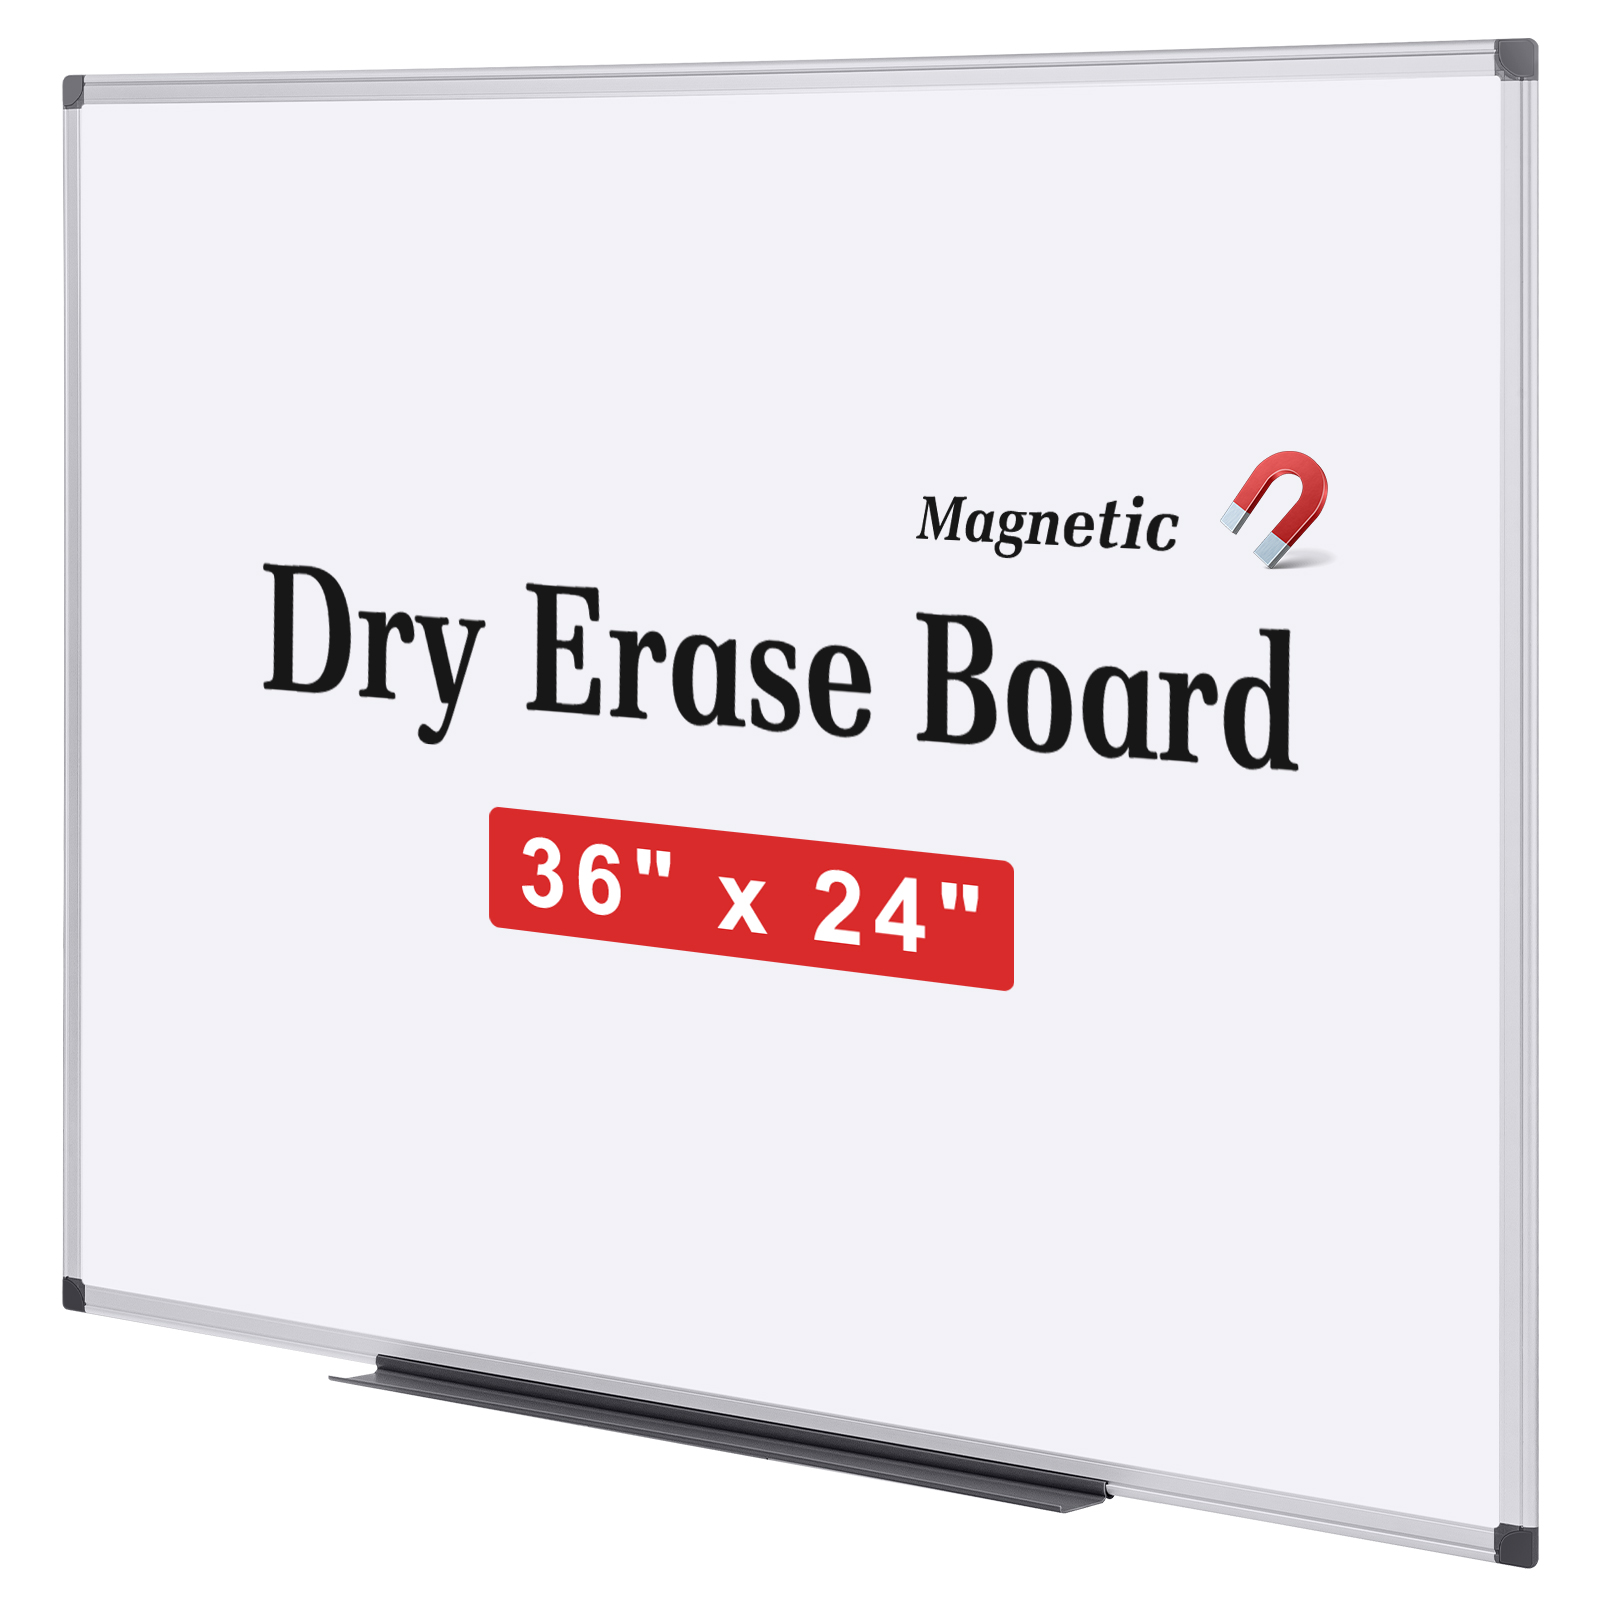 Whiteboards in Whiteboards & Dry Erase Boards 